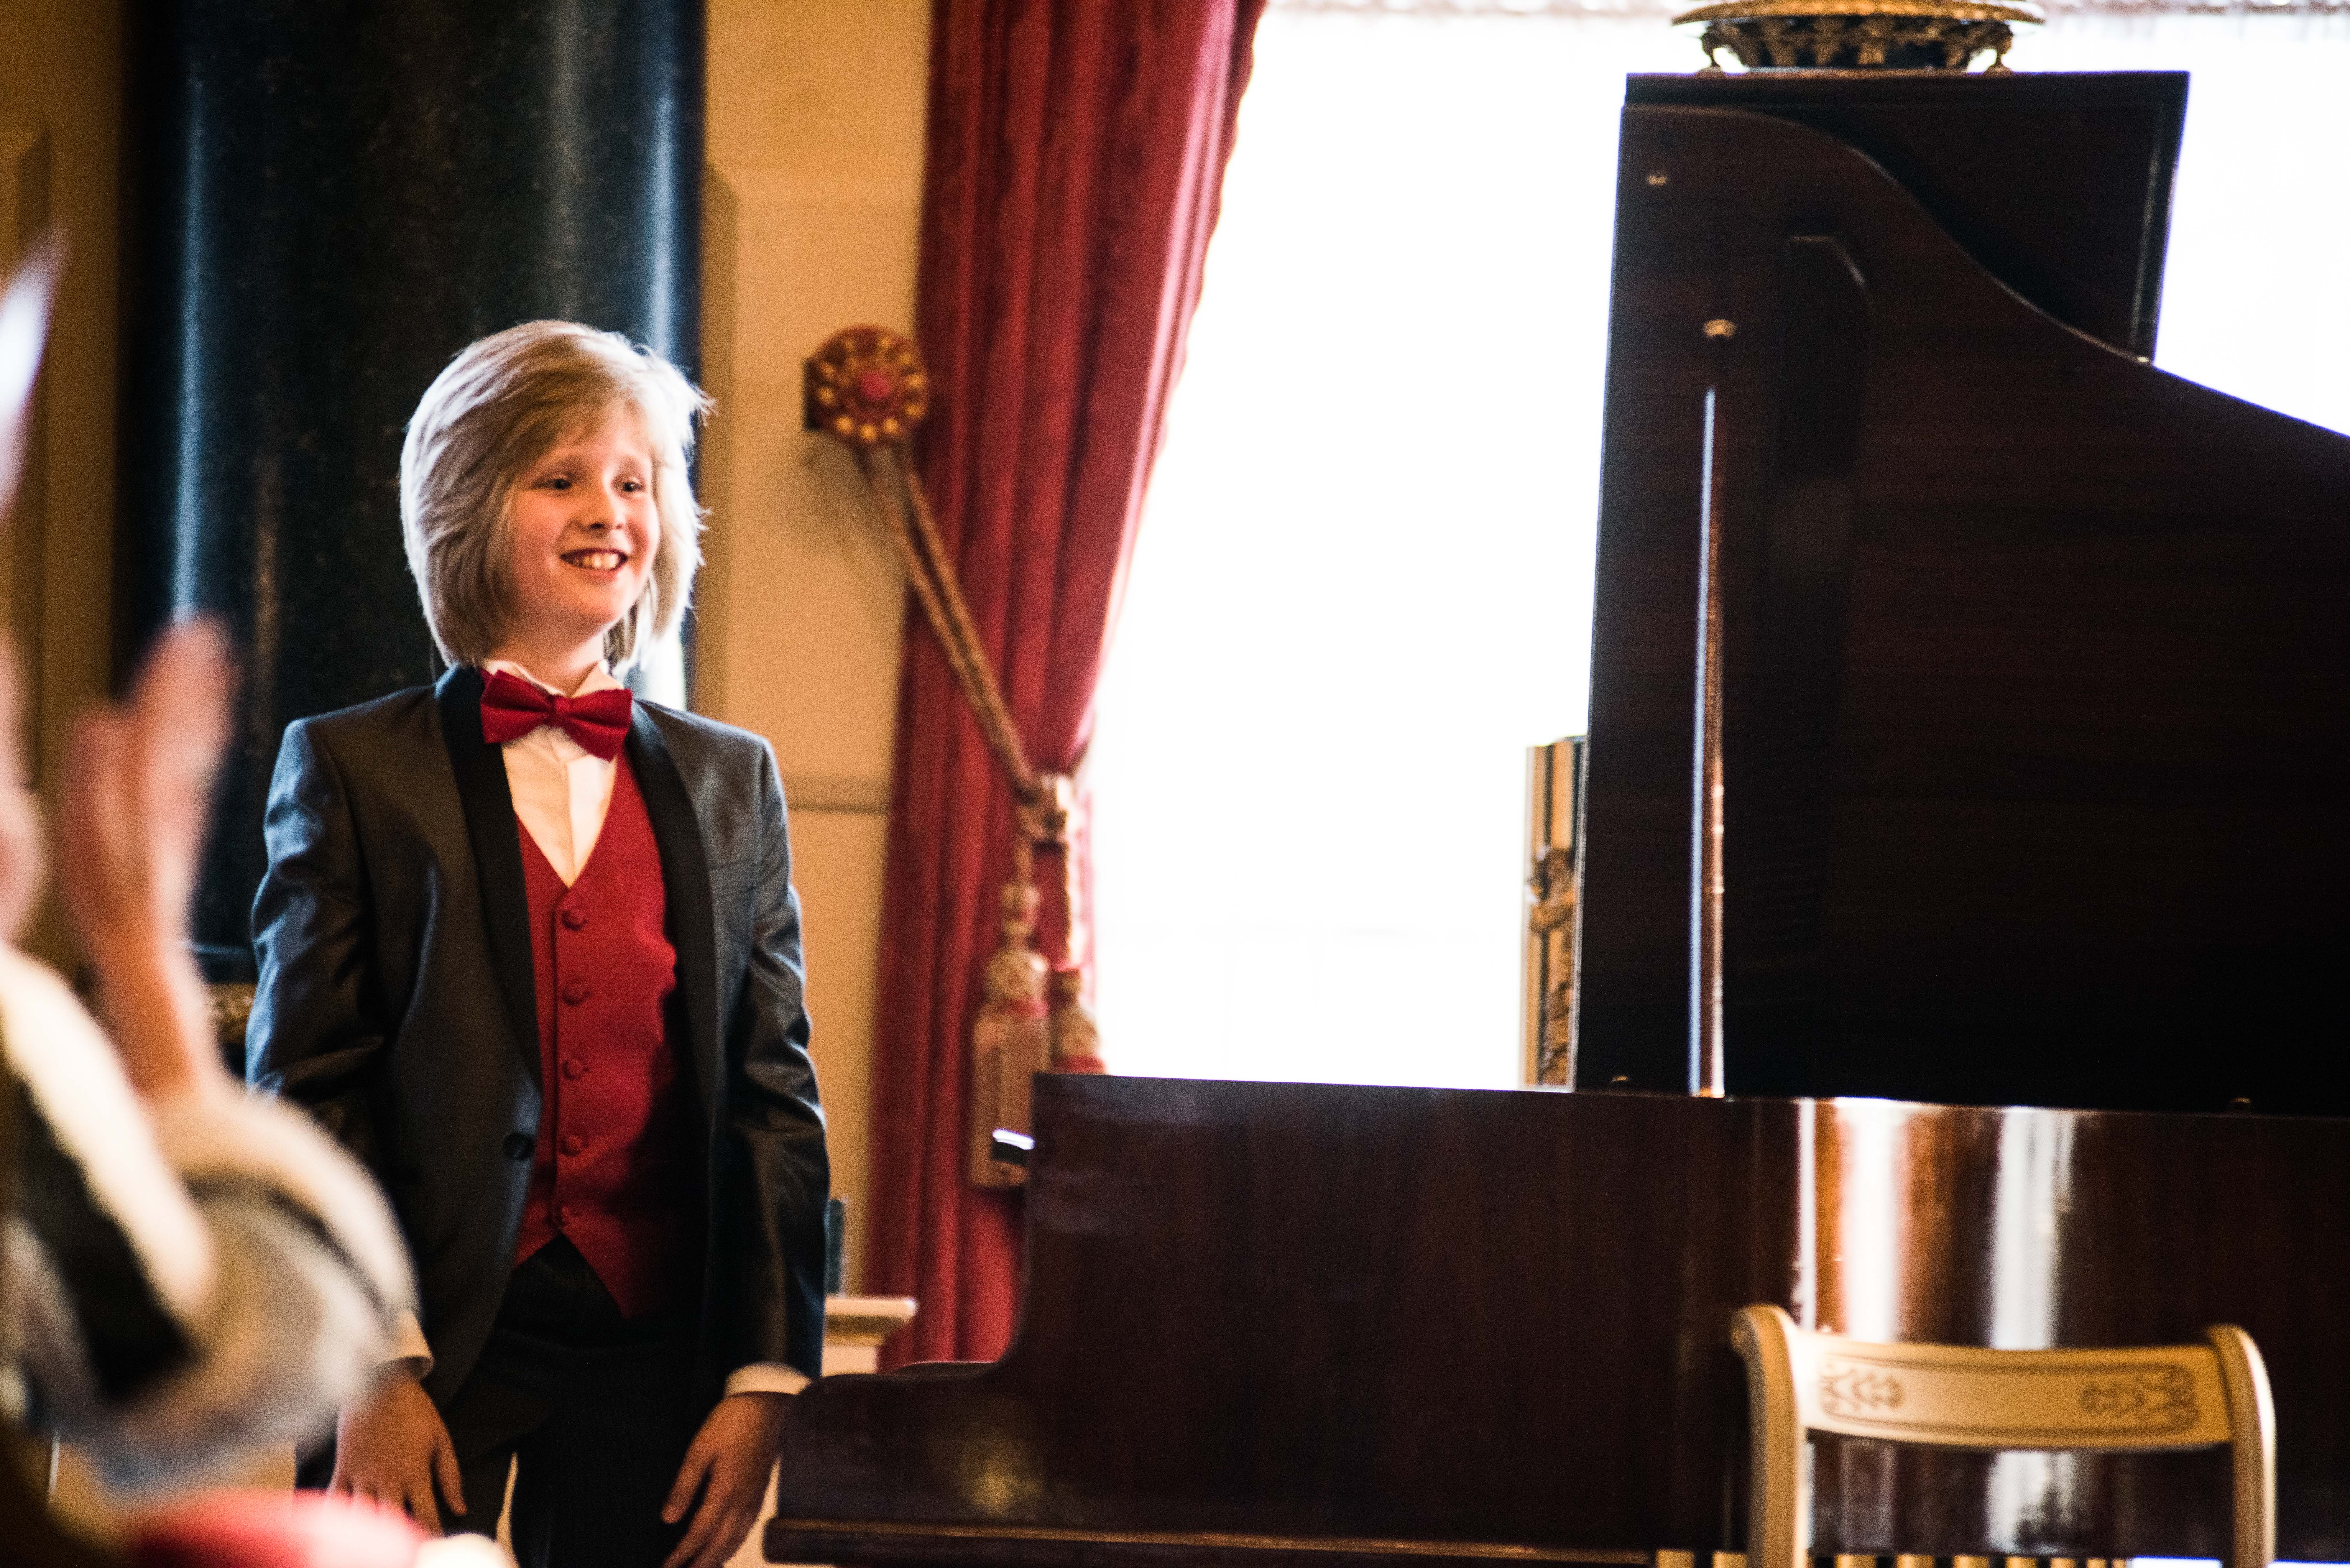 Sebastian beside the piano